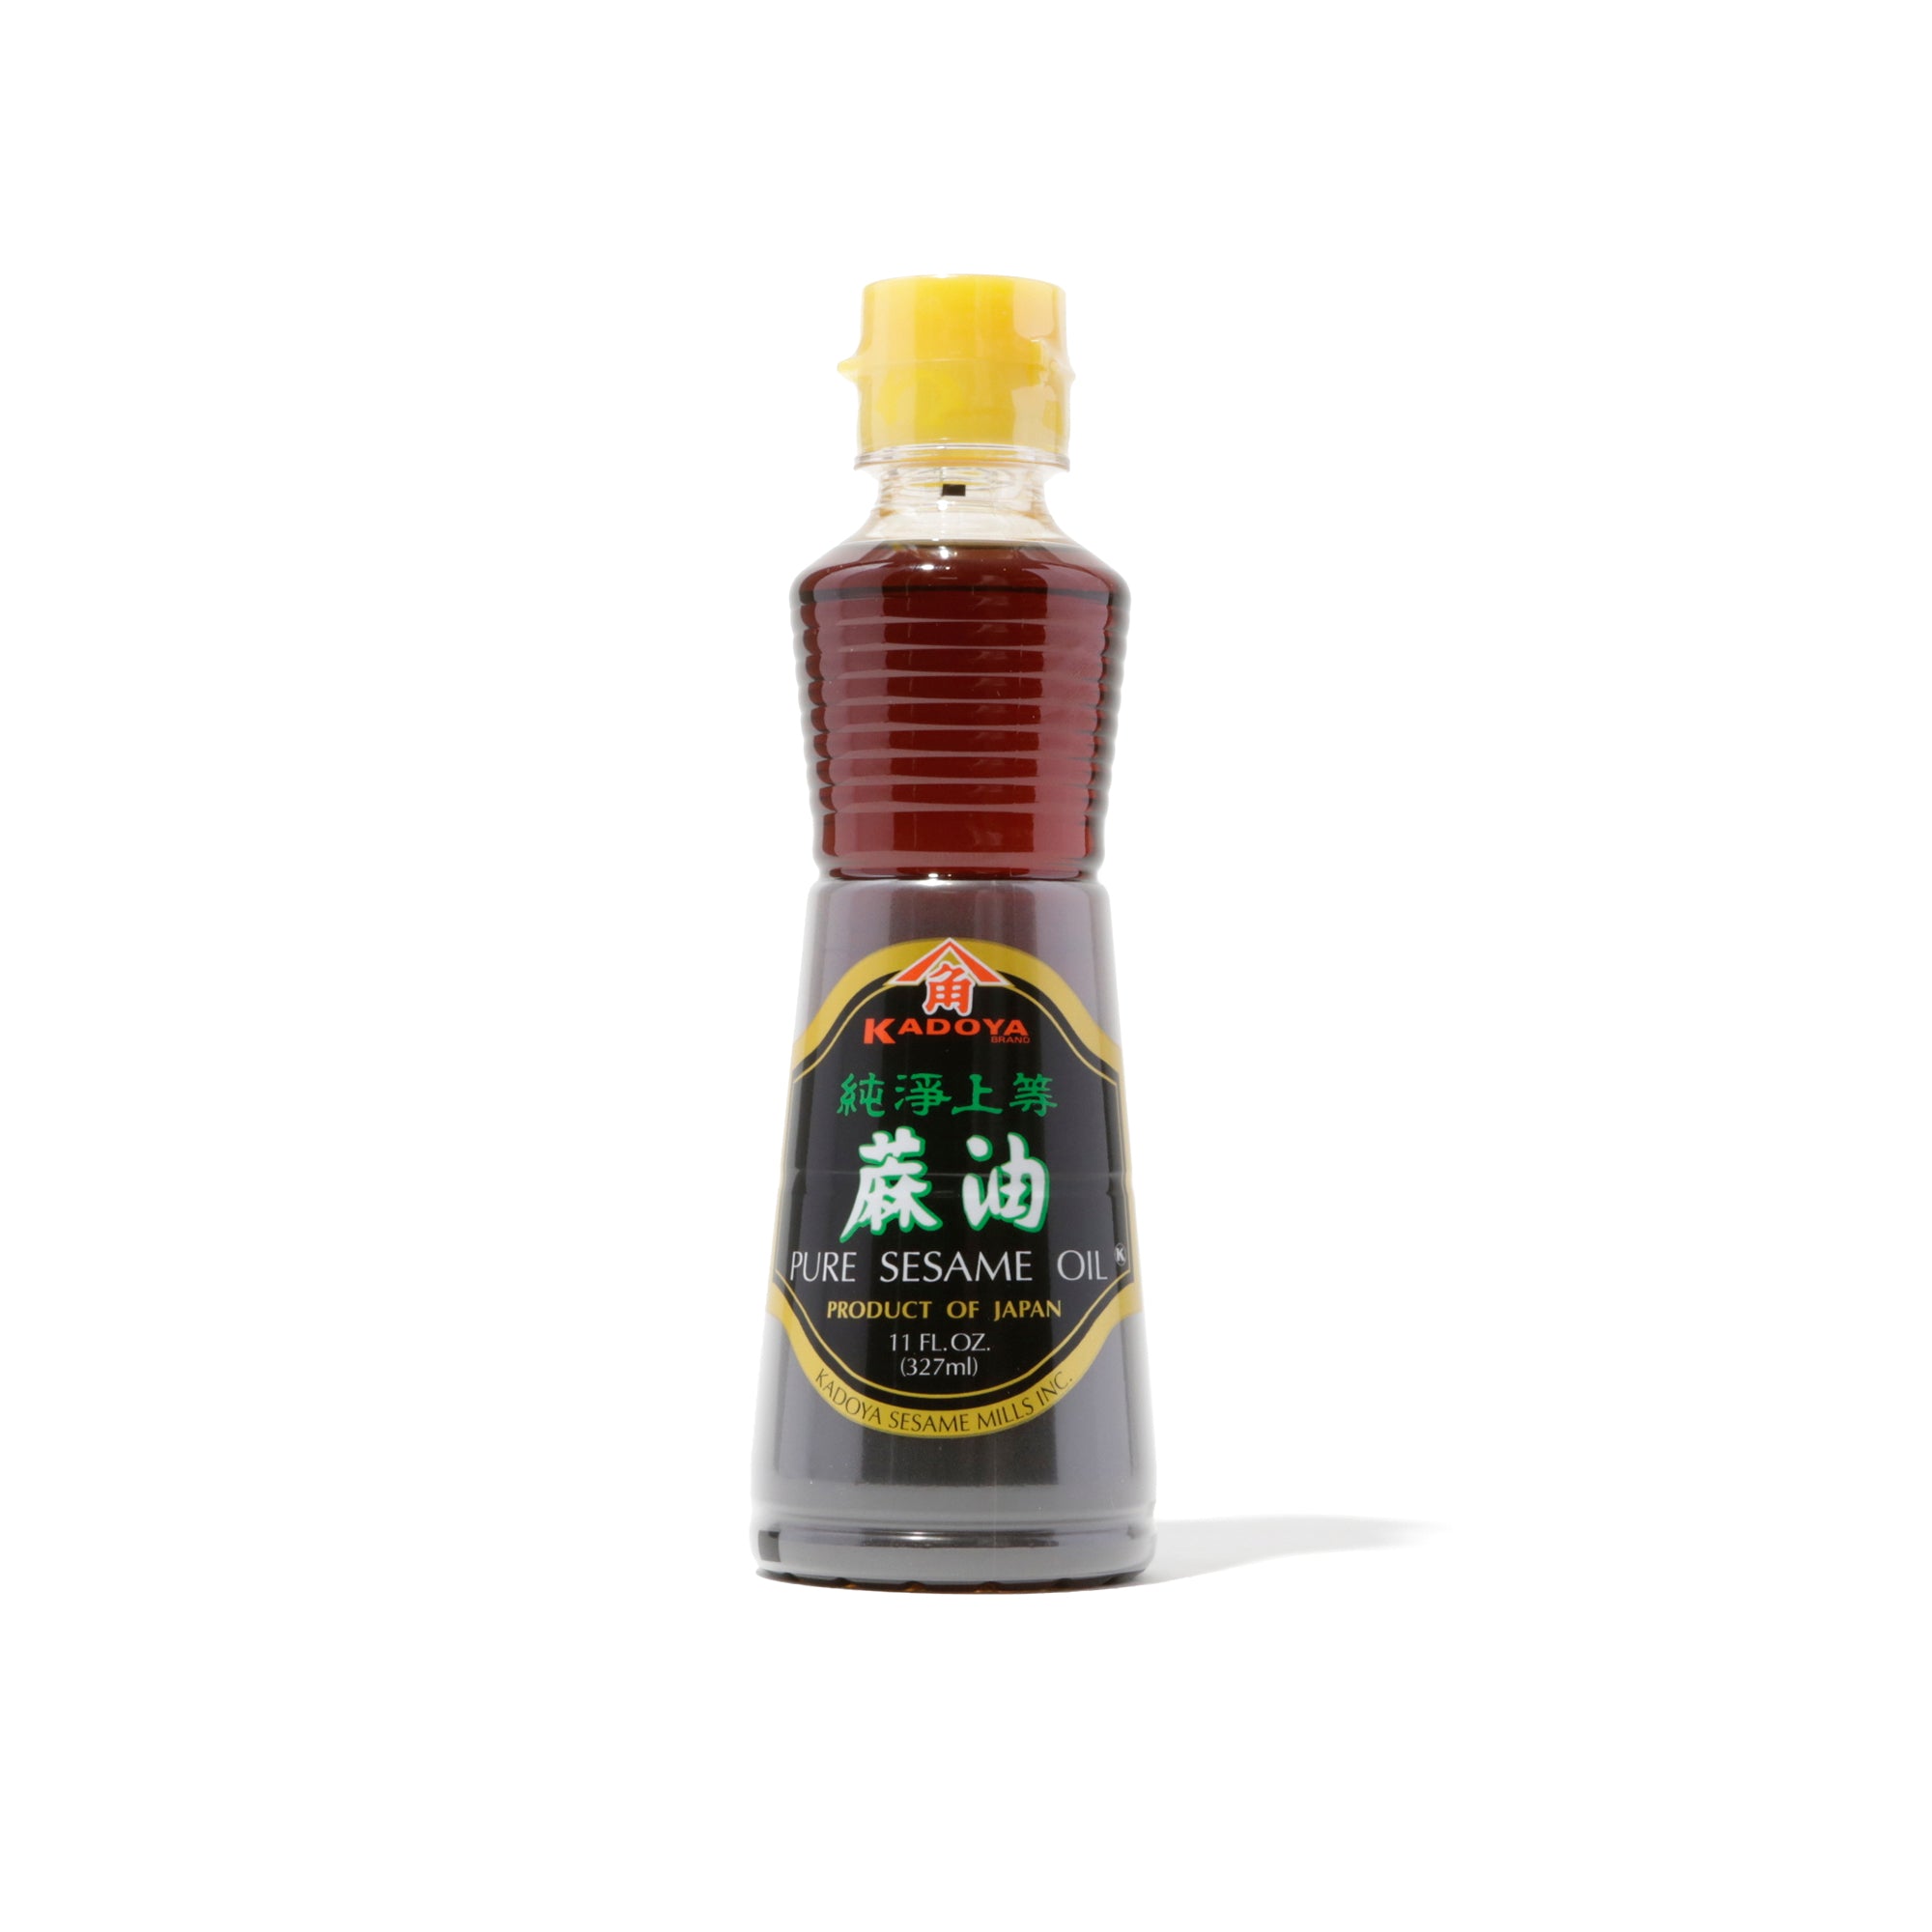 Kadoya Pure Sesame Oil, 11 oz